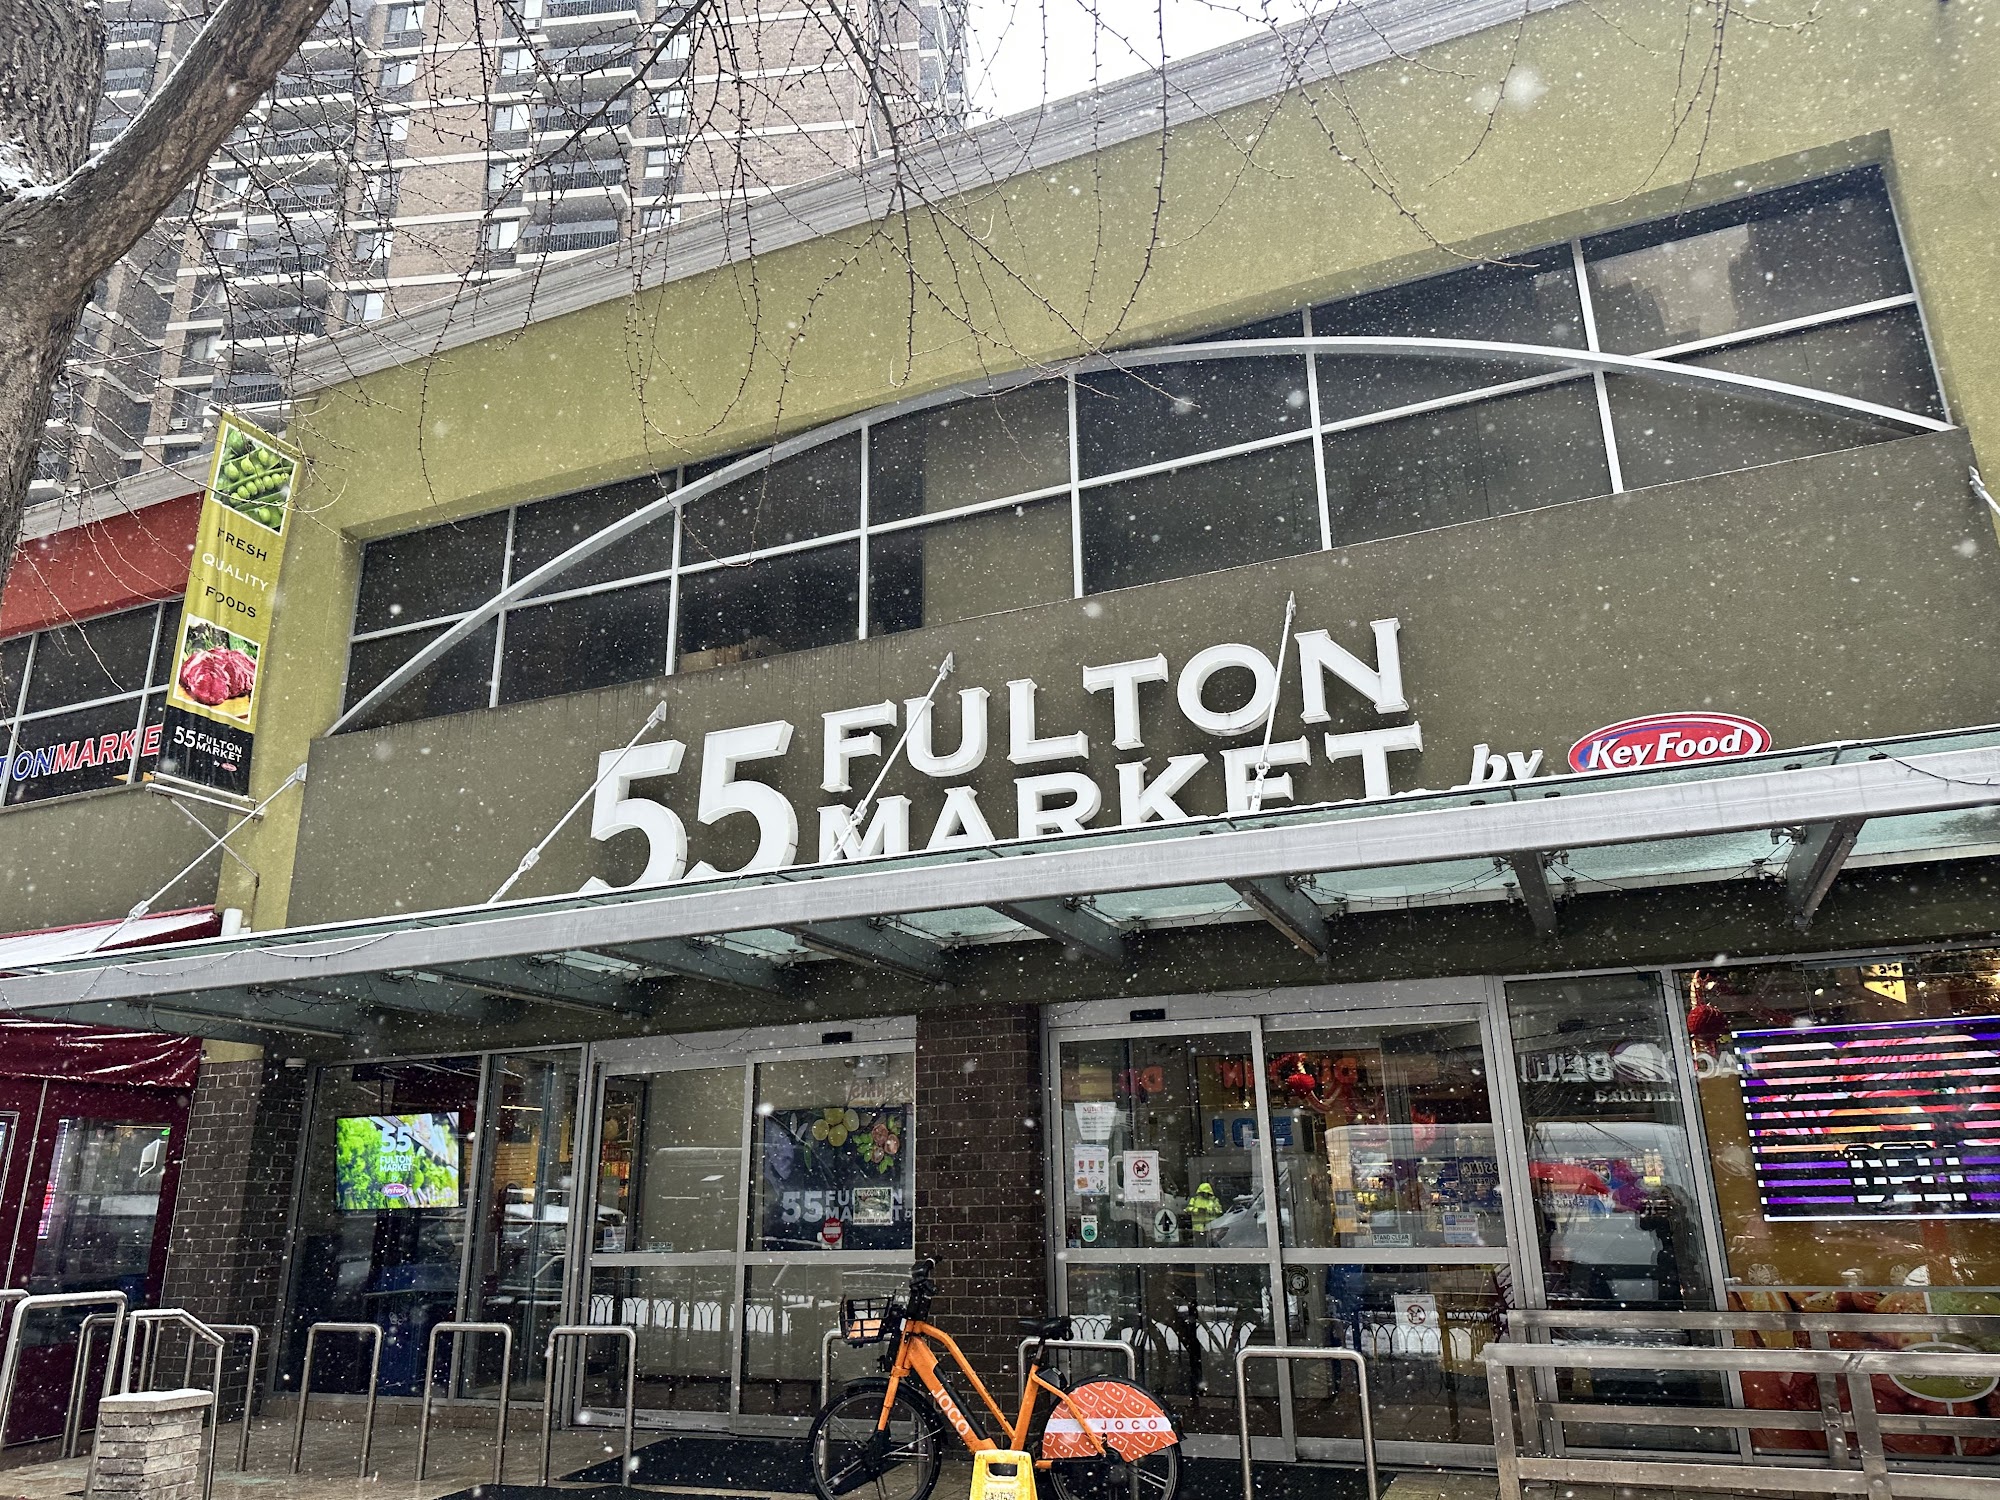 55 Fulton Market by Keyfood